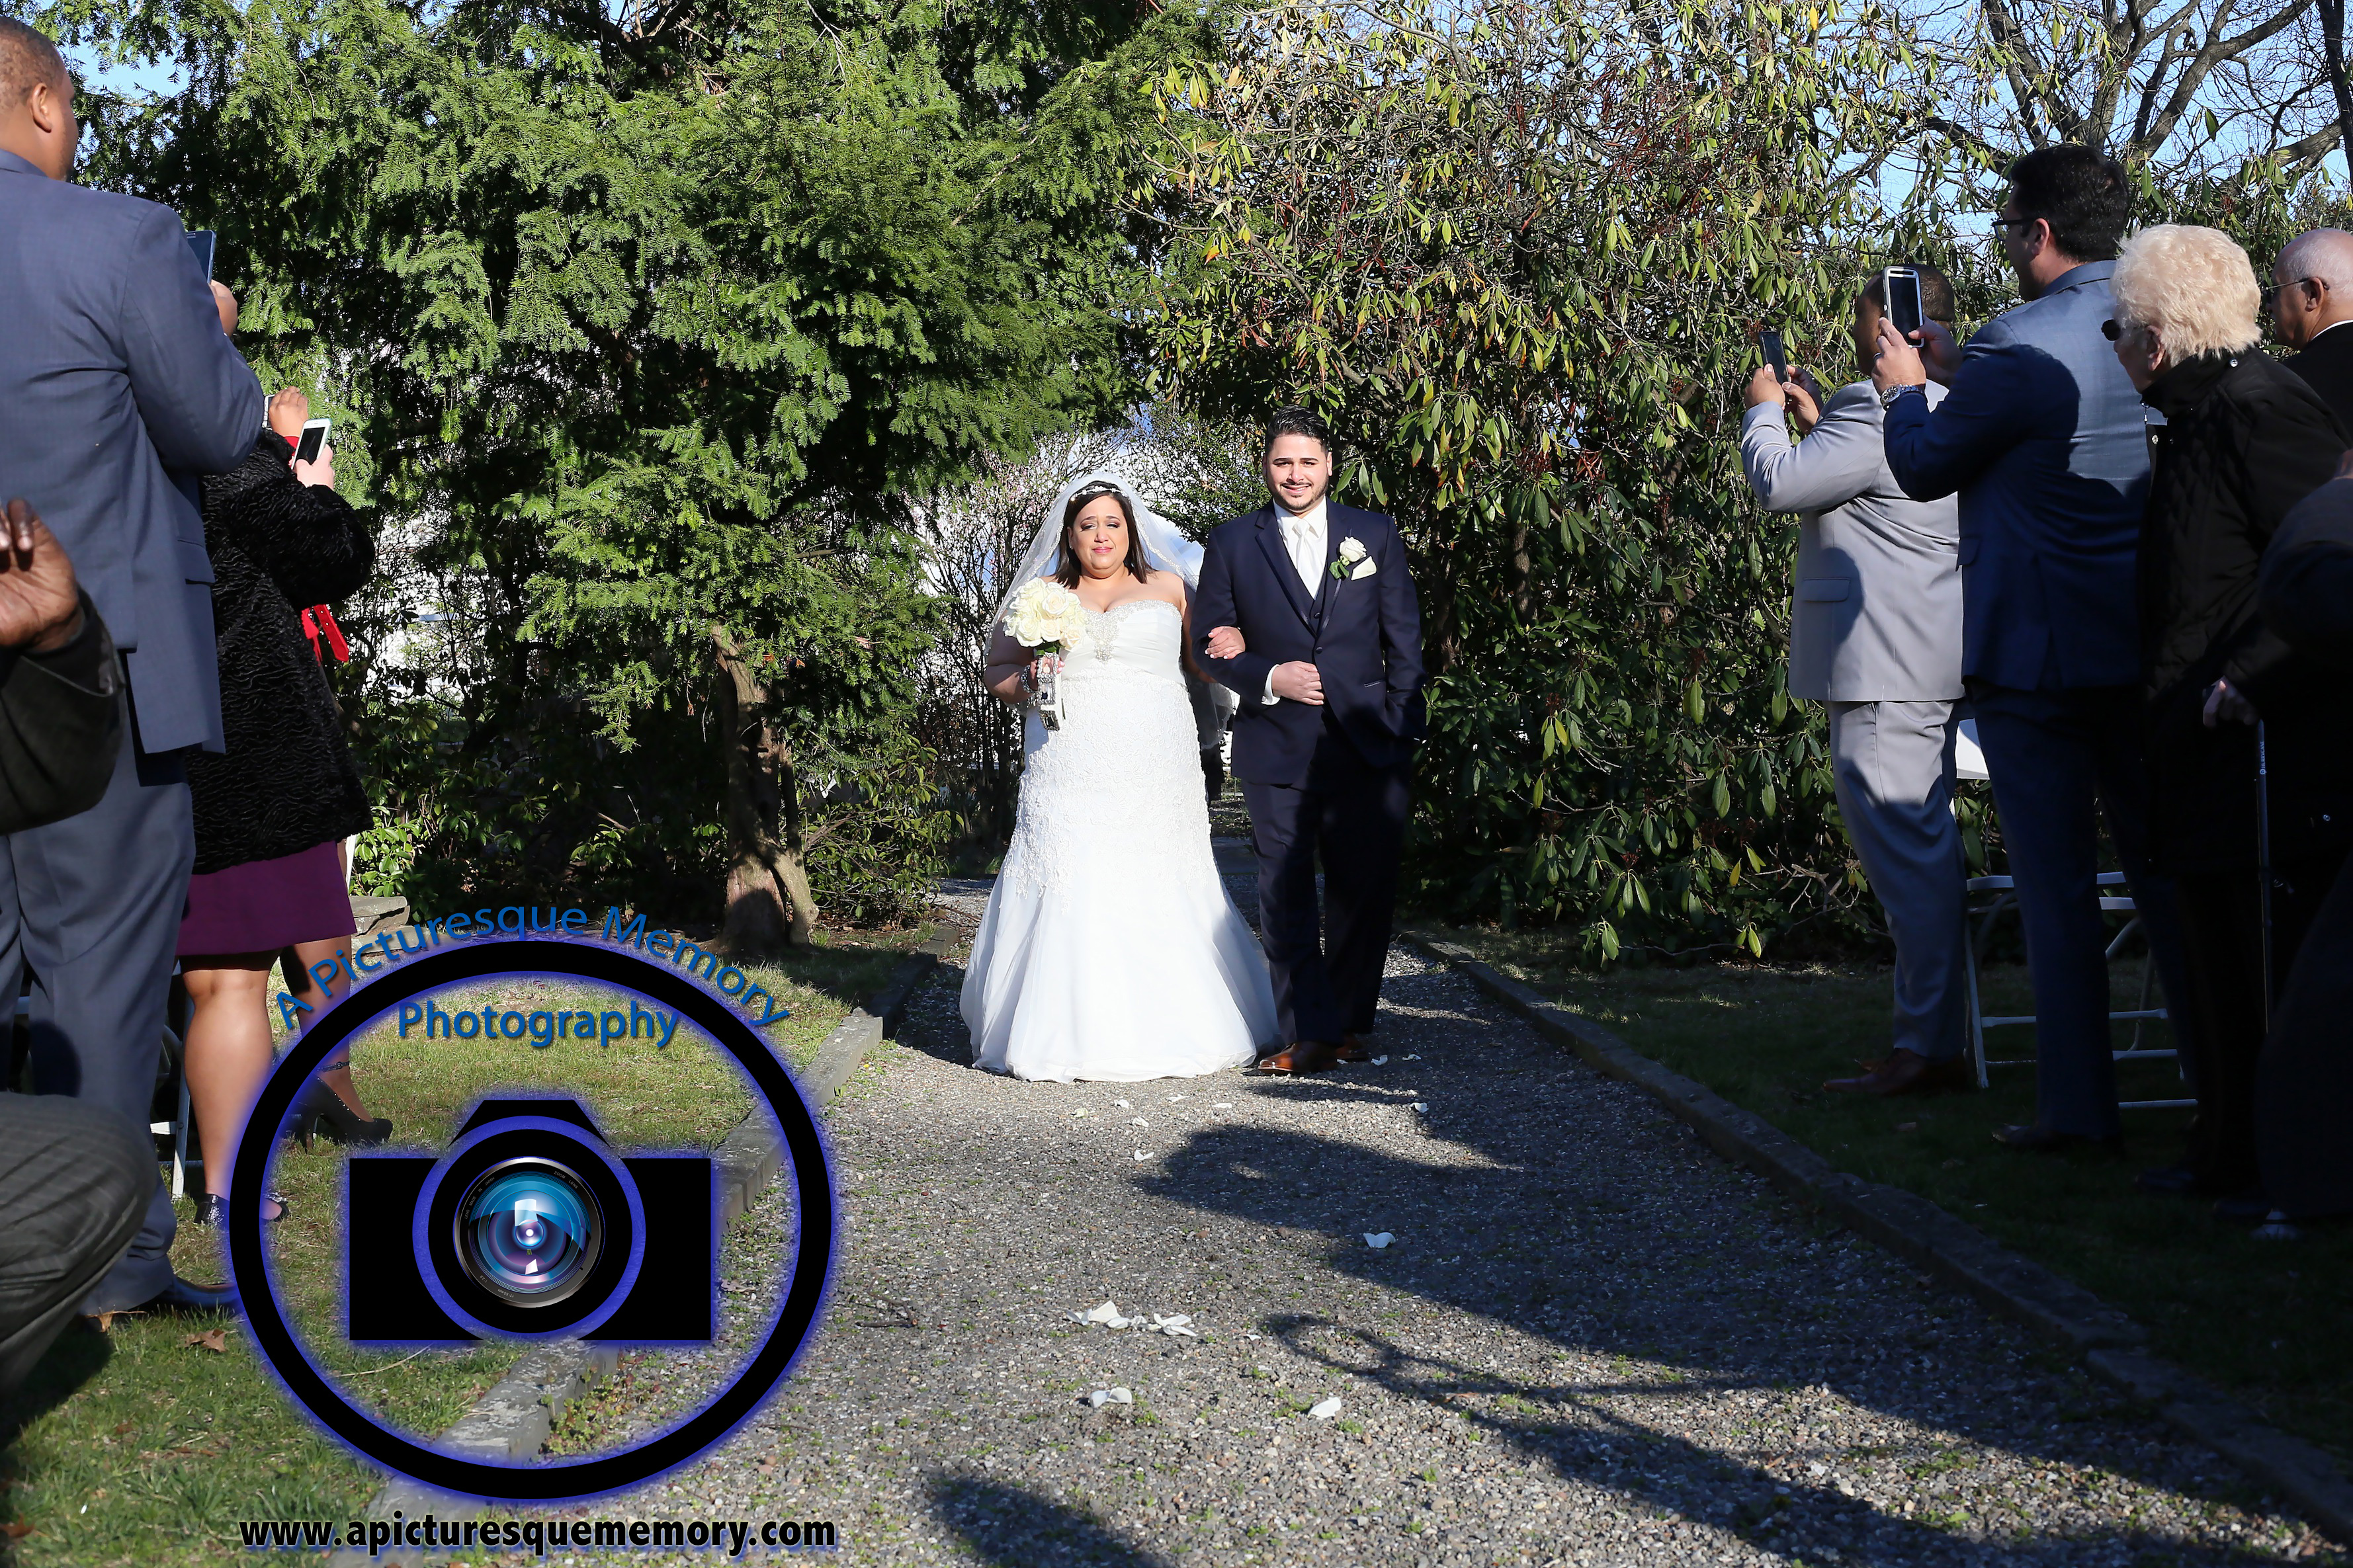 #njwedding, #njweddingphotography, #bloomfieldphotographer, #apicturesquememoryphotography, #oaksidemansionwedding, #oaksidebloomfieldculturalcenter, #weddingphotos, #outsideceremony, #bridesprocession